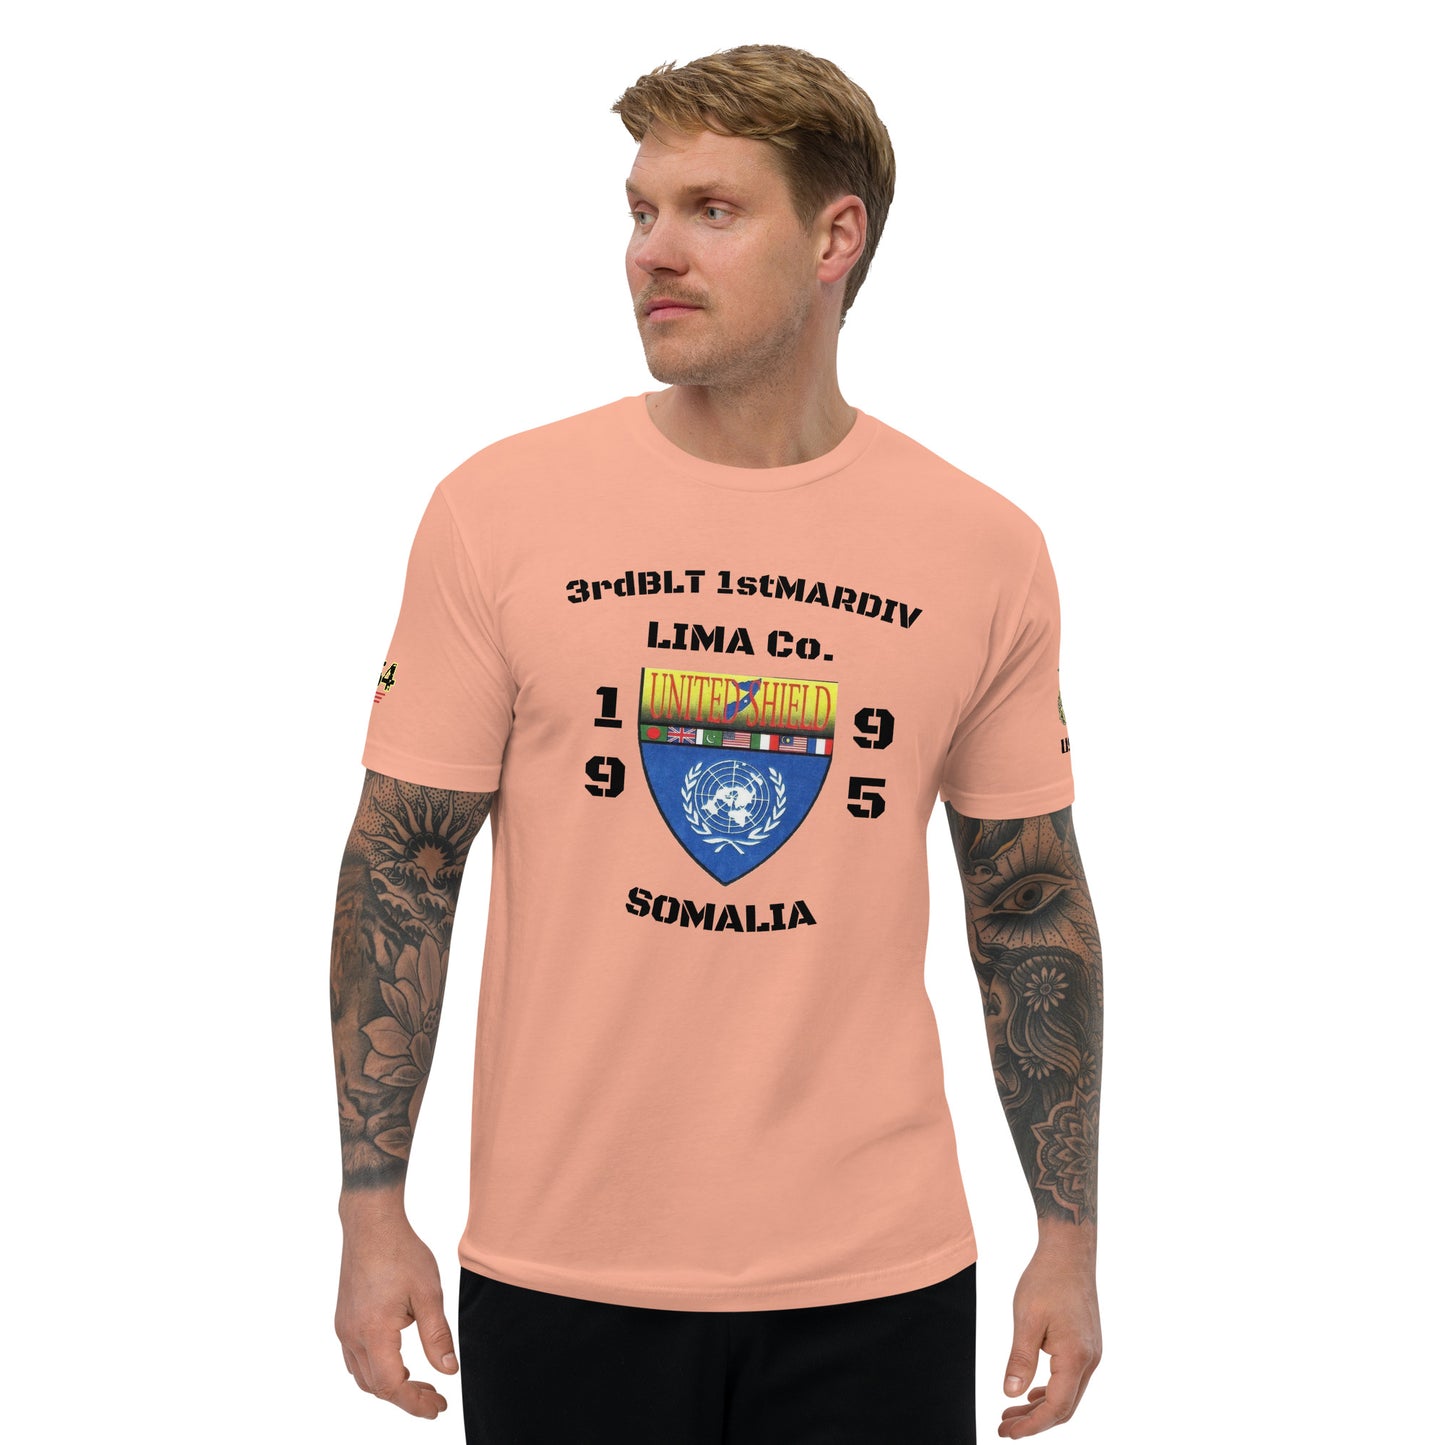 OPS United Shield 954 Signature Short Sleeve T-shirt